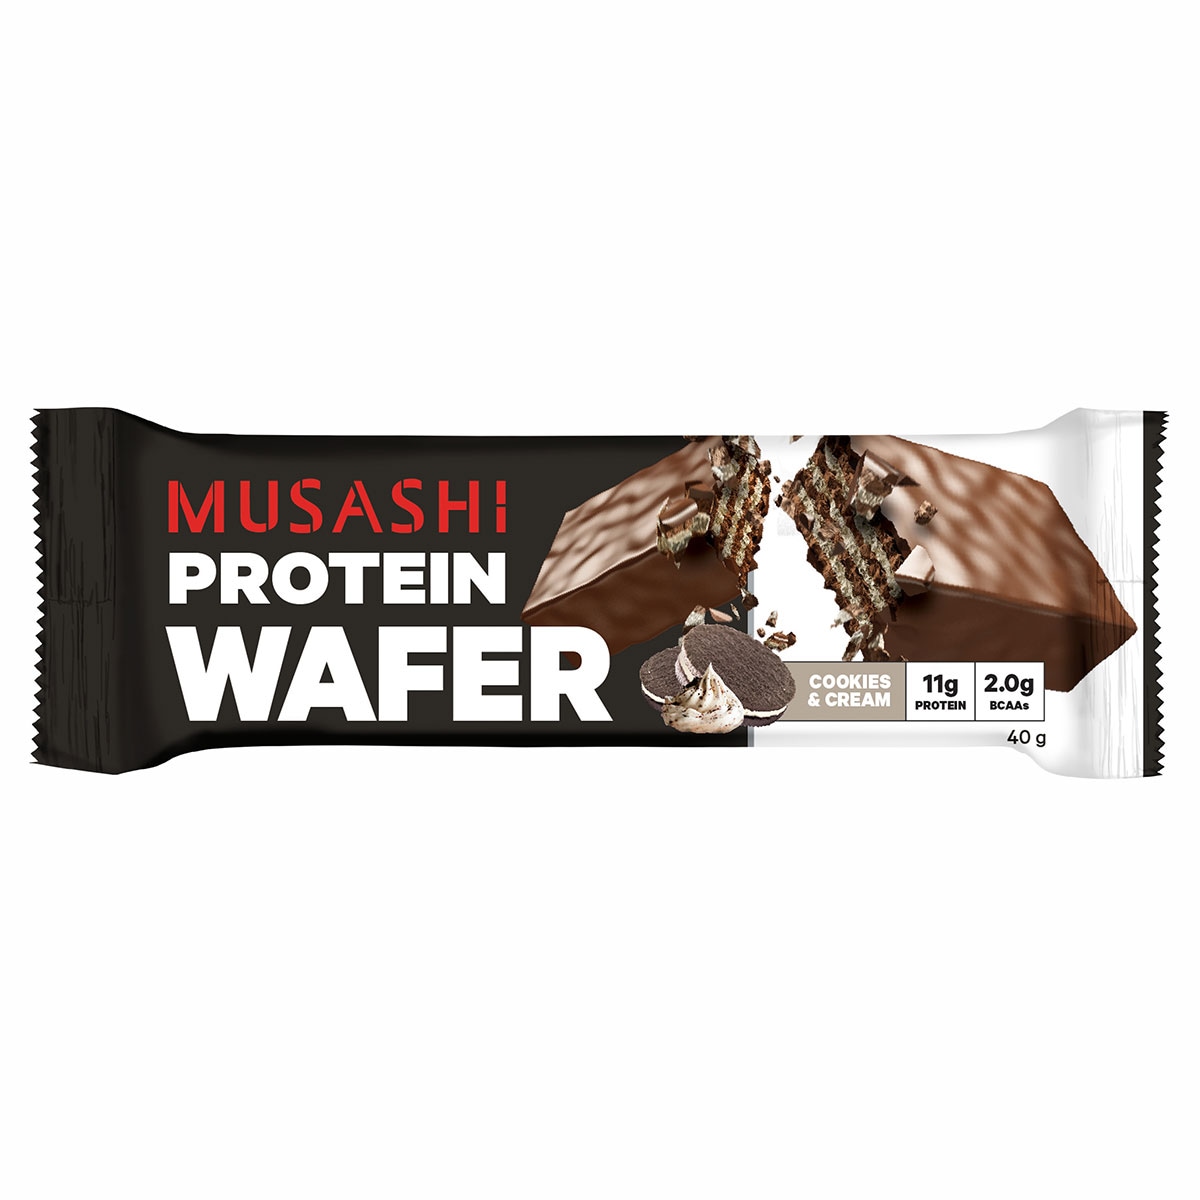 Musashi Protein Wafer Cookies & Cream 40g Musashi